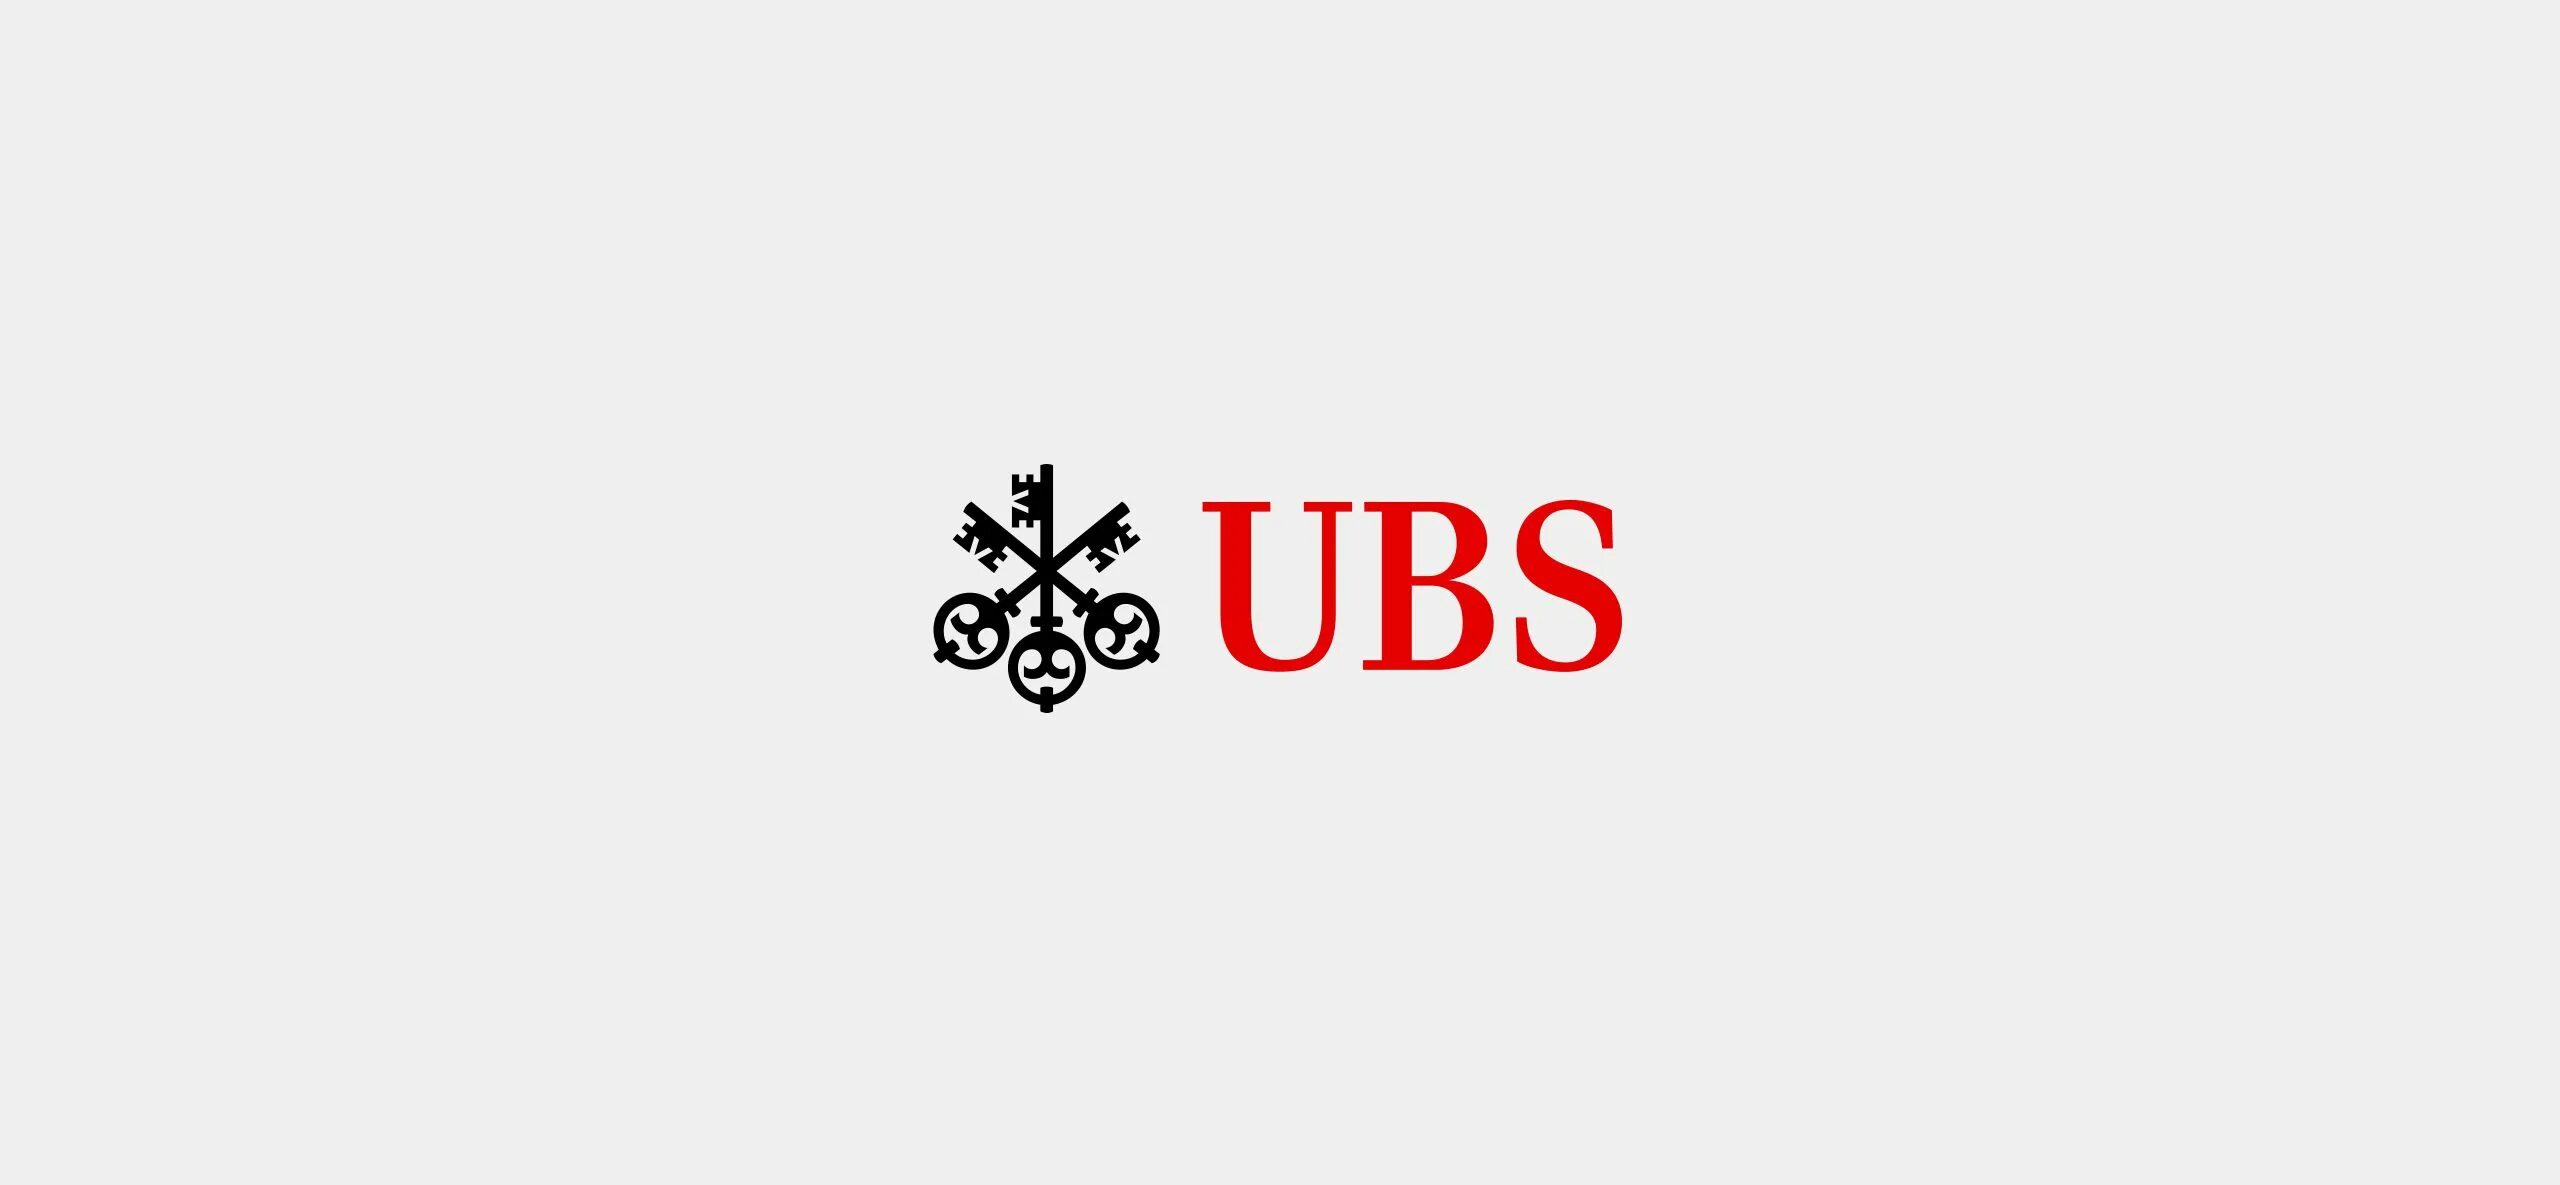 Банку ubs. Логотип швейцарского банка. Банки Швейцарии UBS. UBS логотип. Ю би ЭС банк.